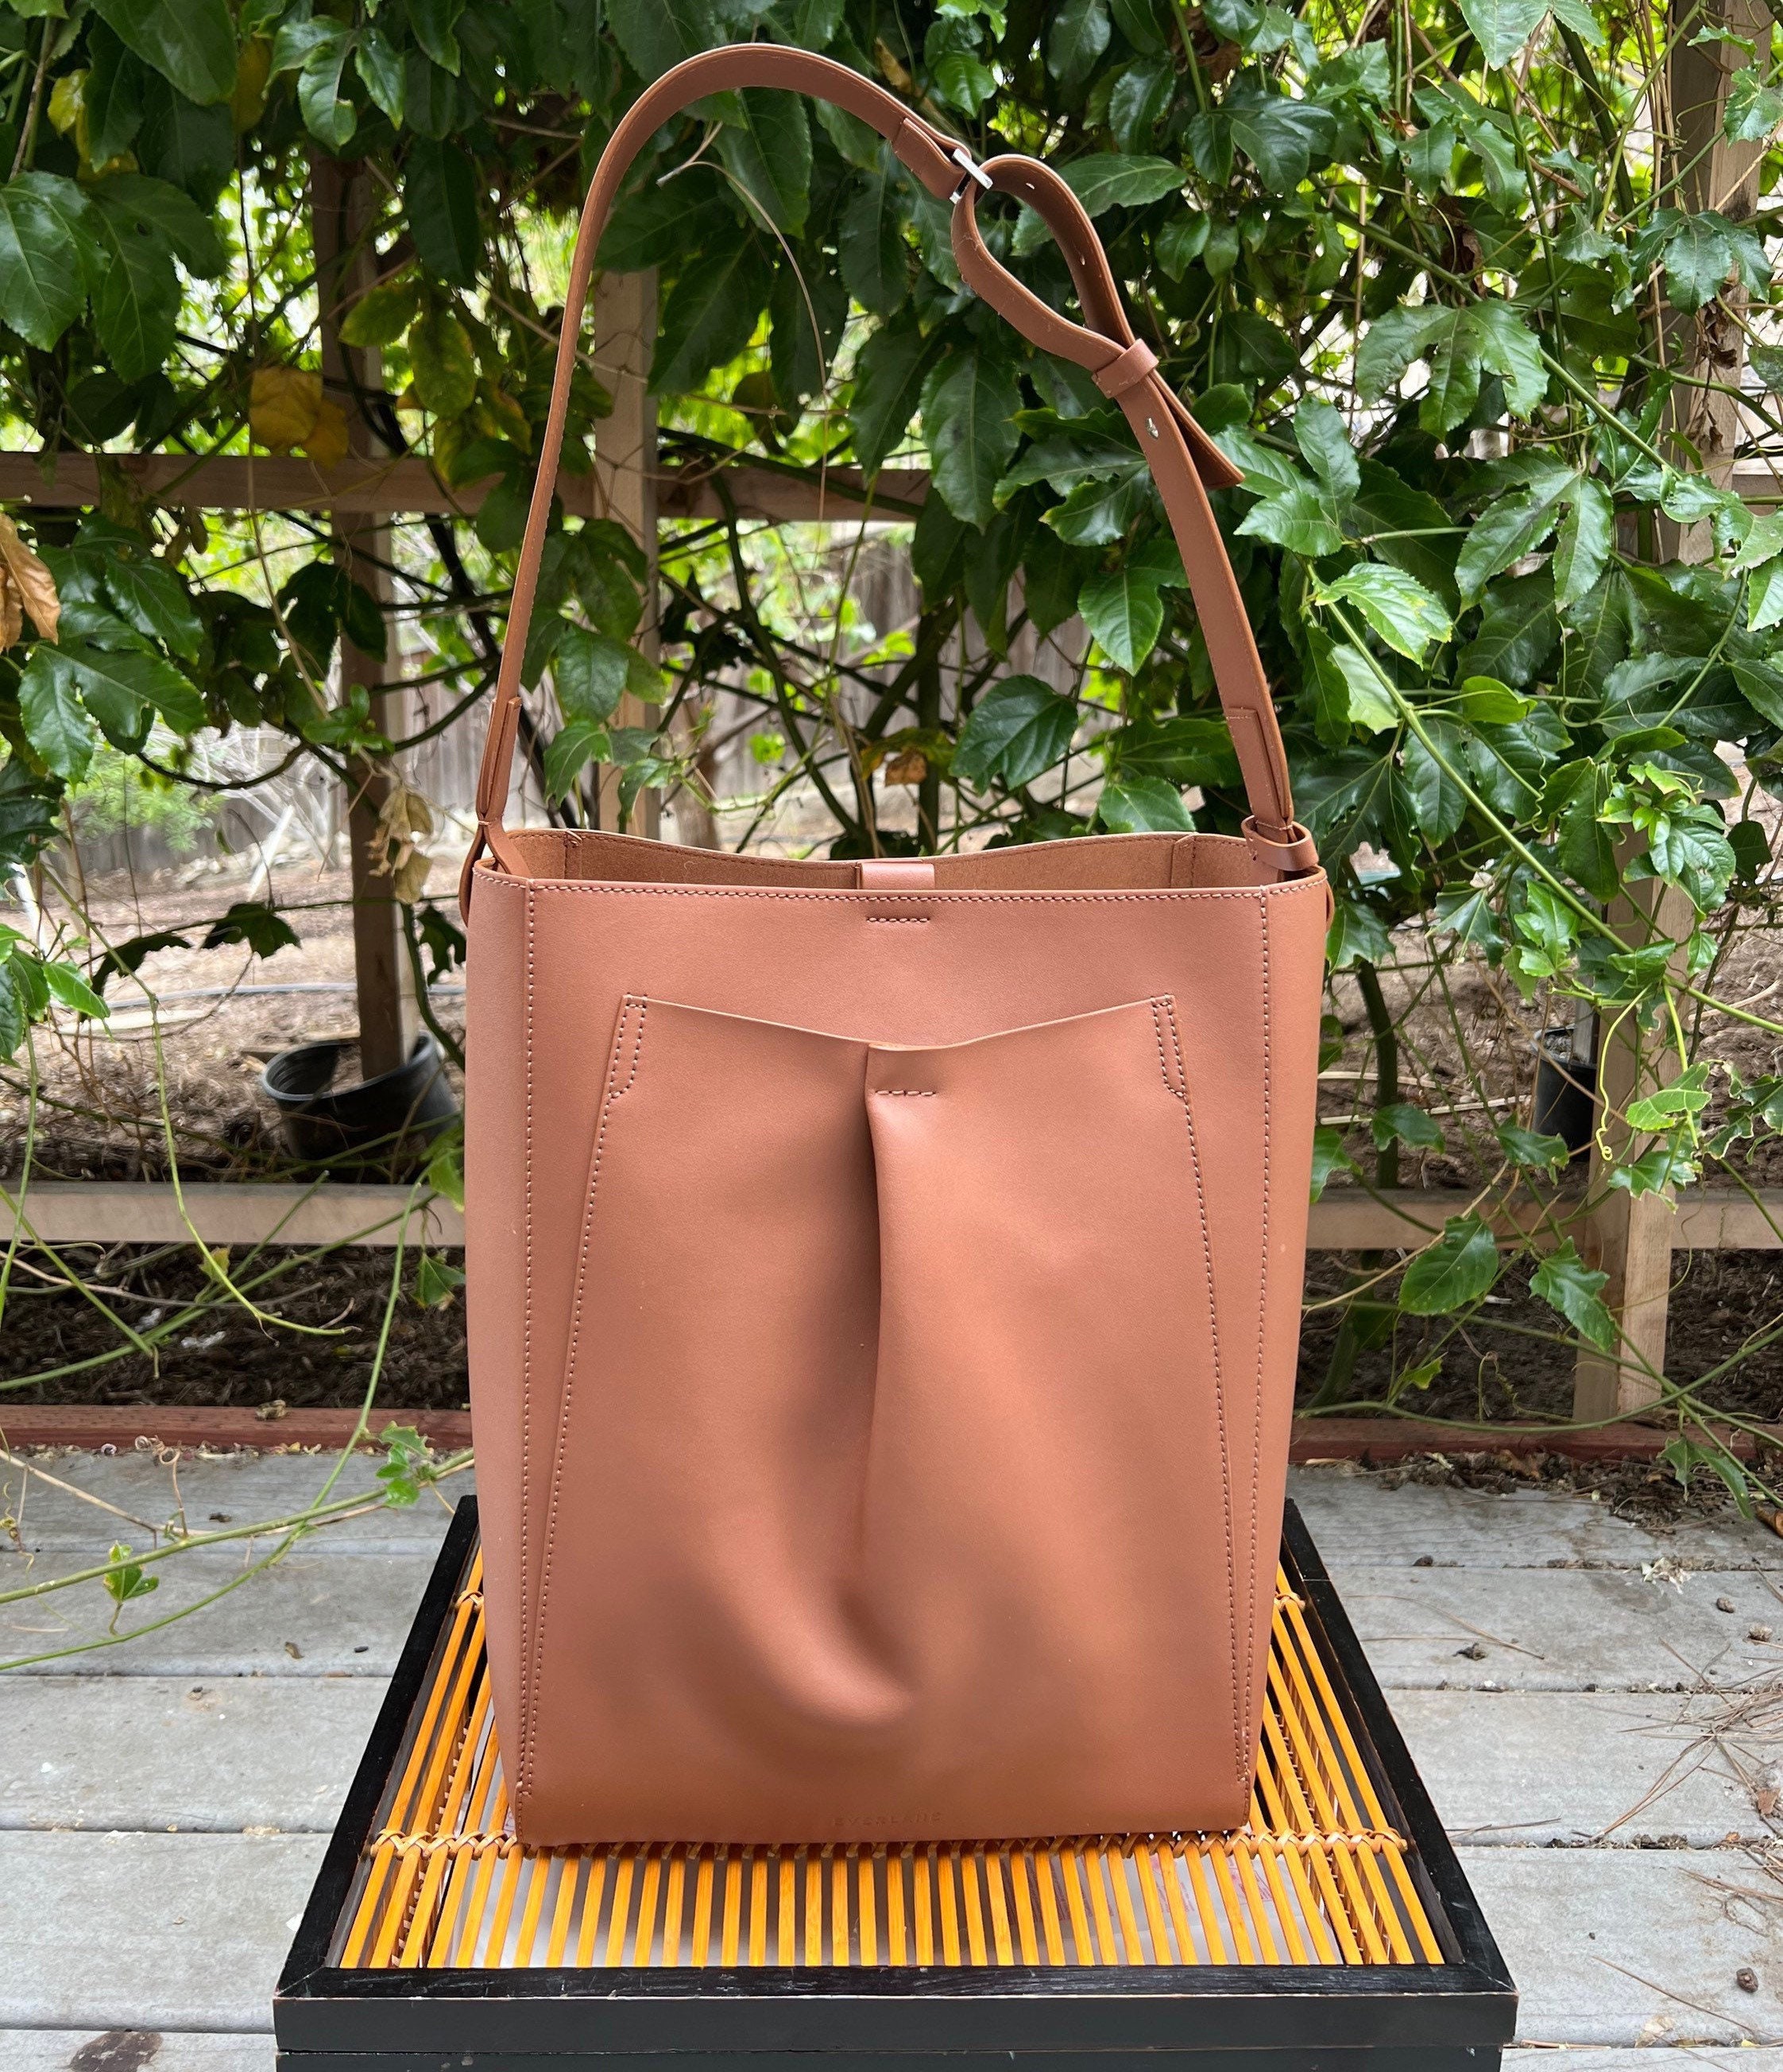 Everlane Leather Mini Studio Bag